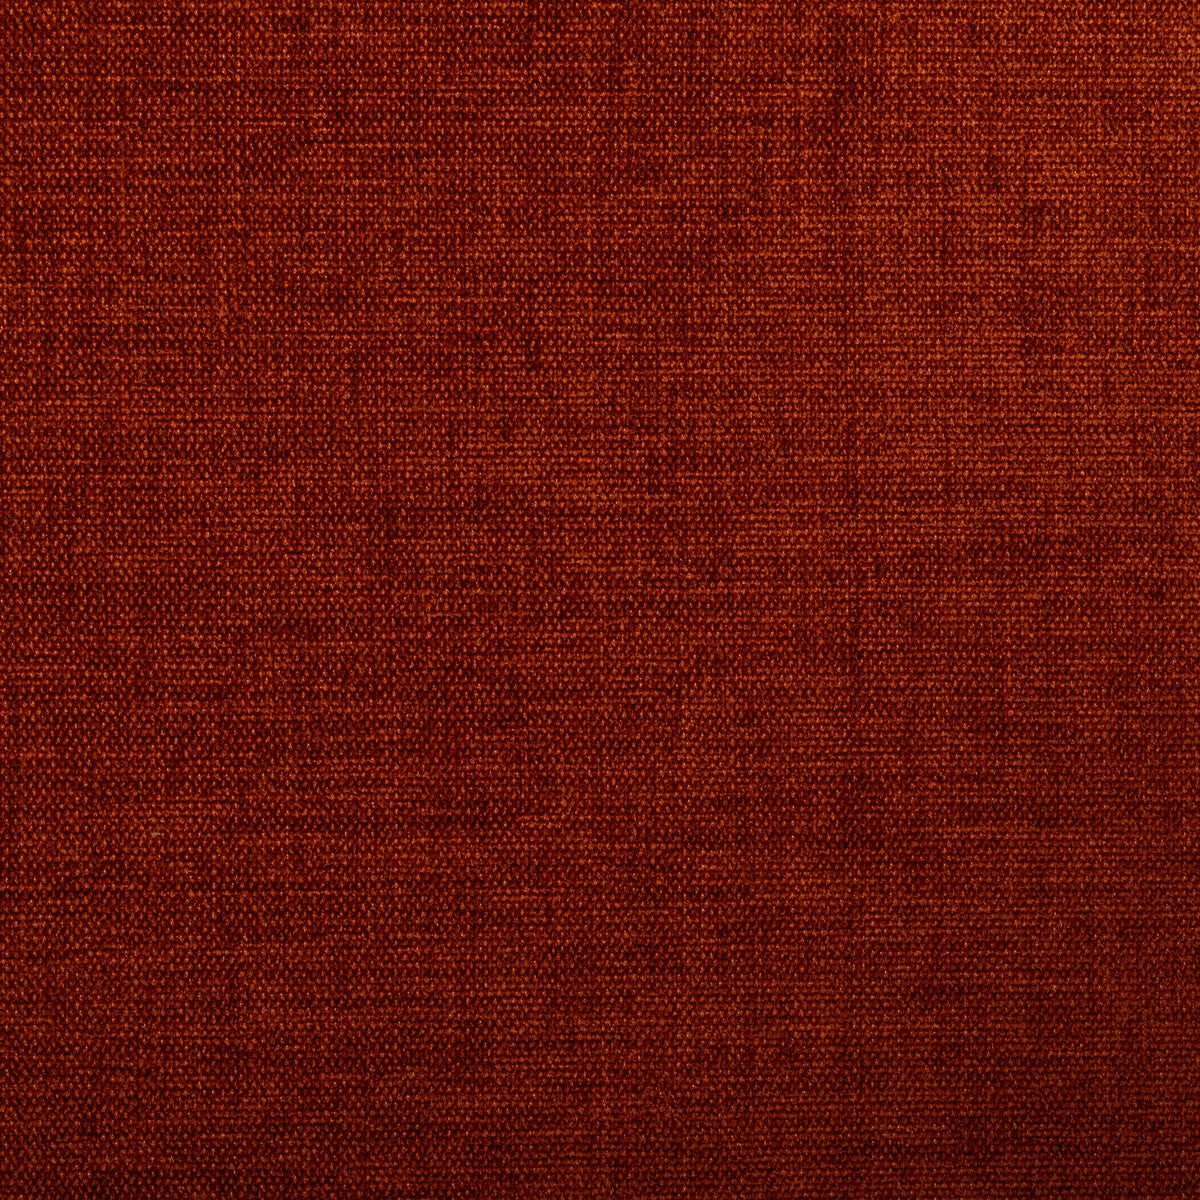 Kravet Smart fabric in 34959-212 color - pattern 34959.212.0 - by Kravet Smart in the Performance Kravetarmor collection